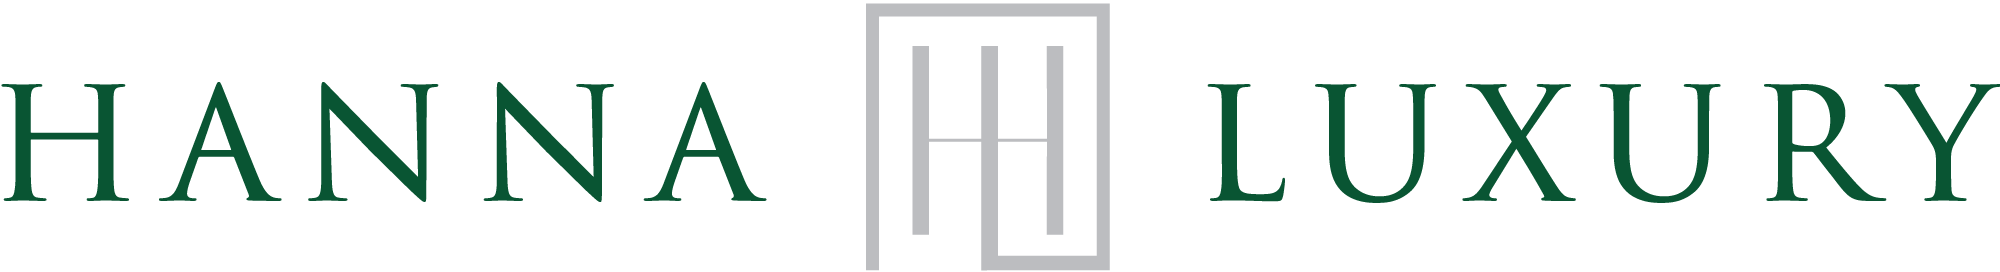 hanna-luxury-logo-color